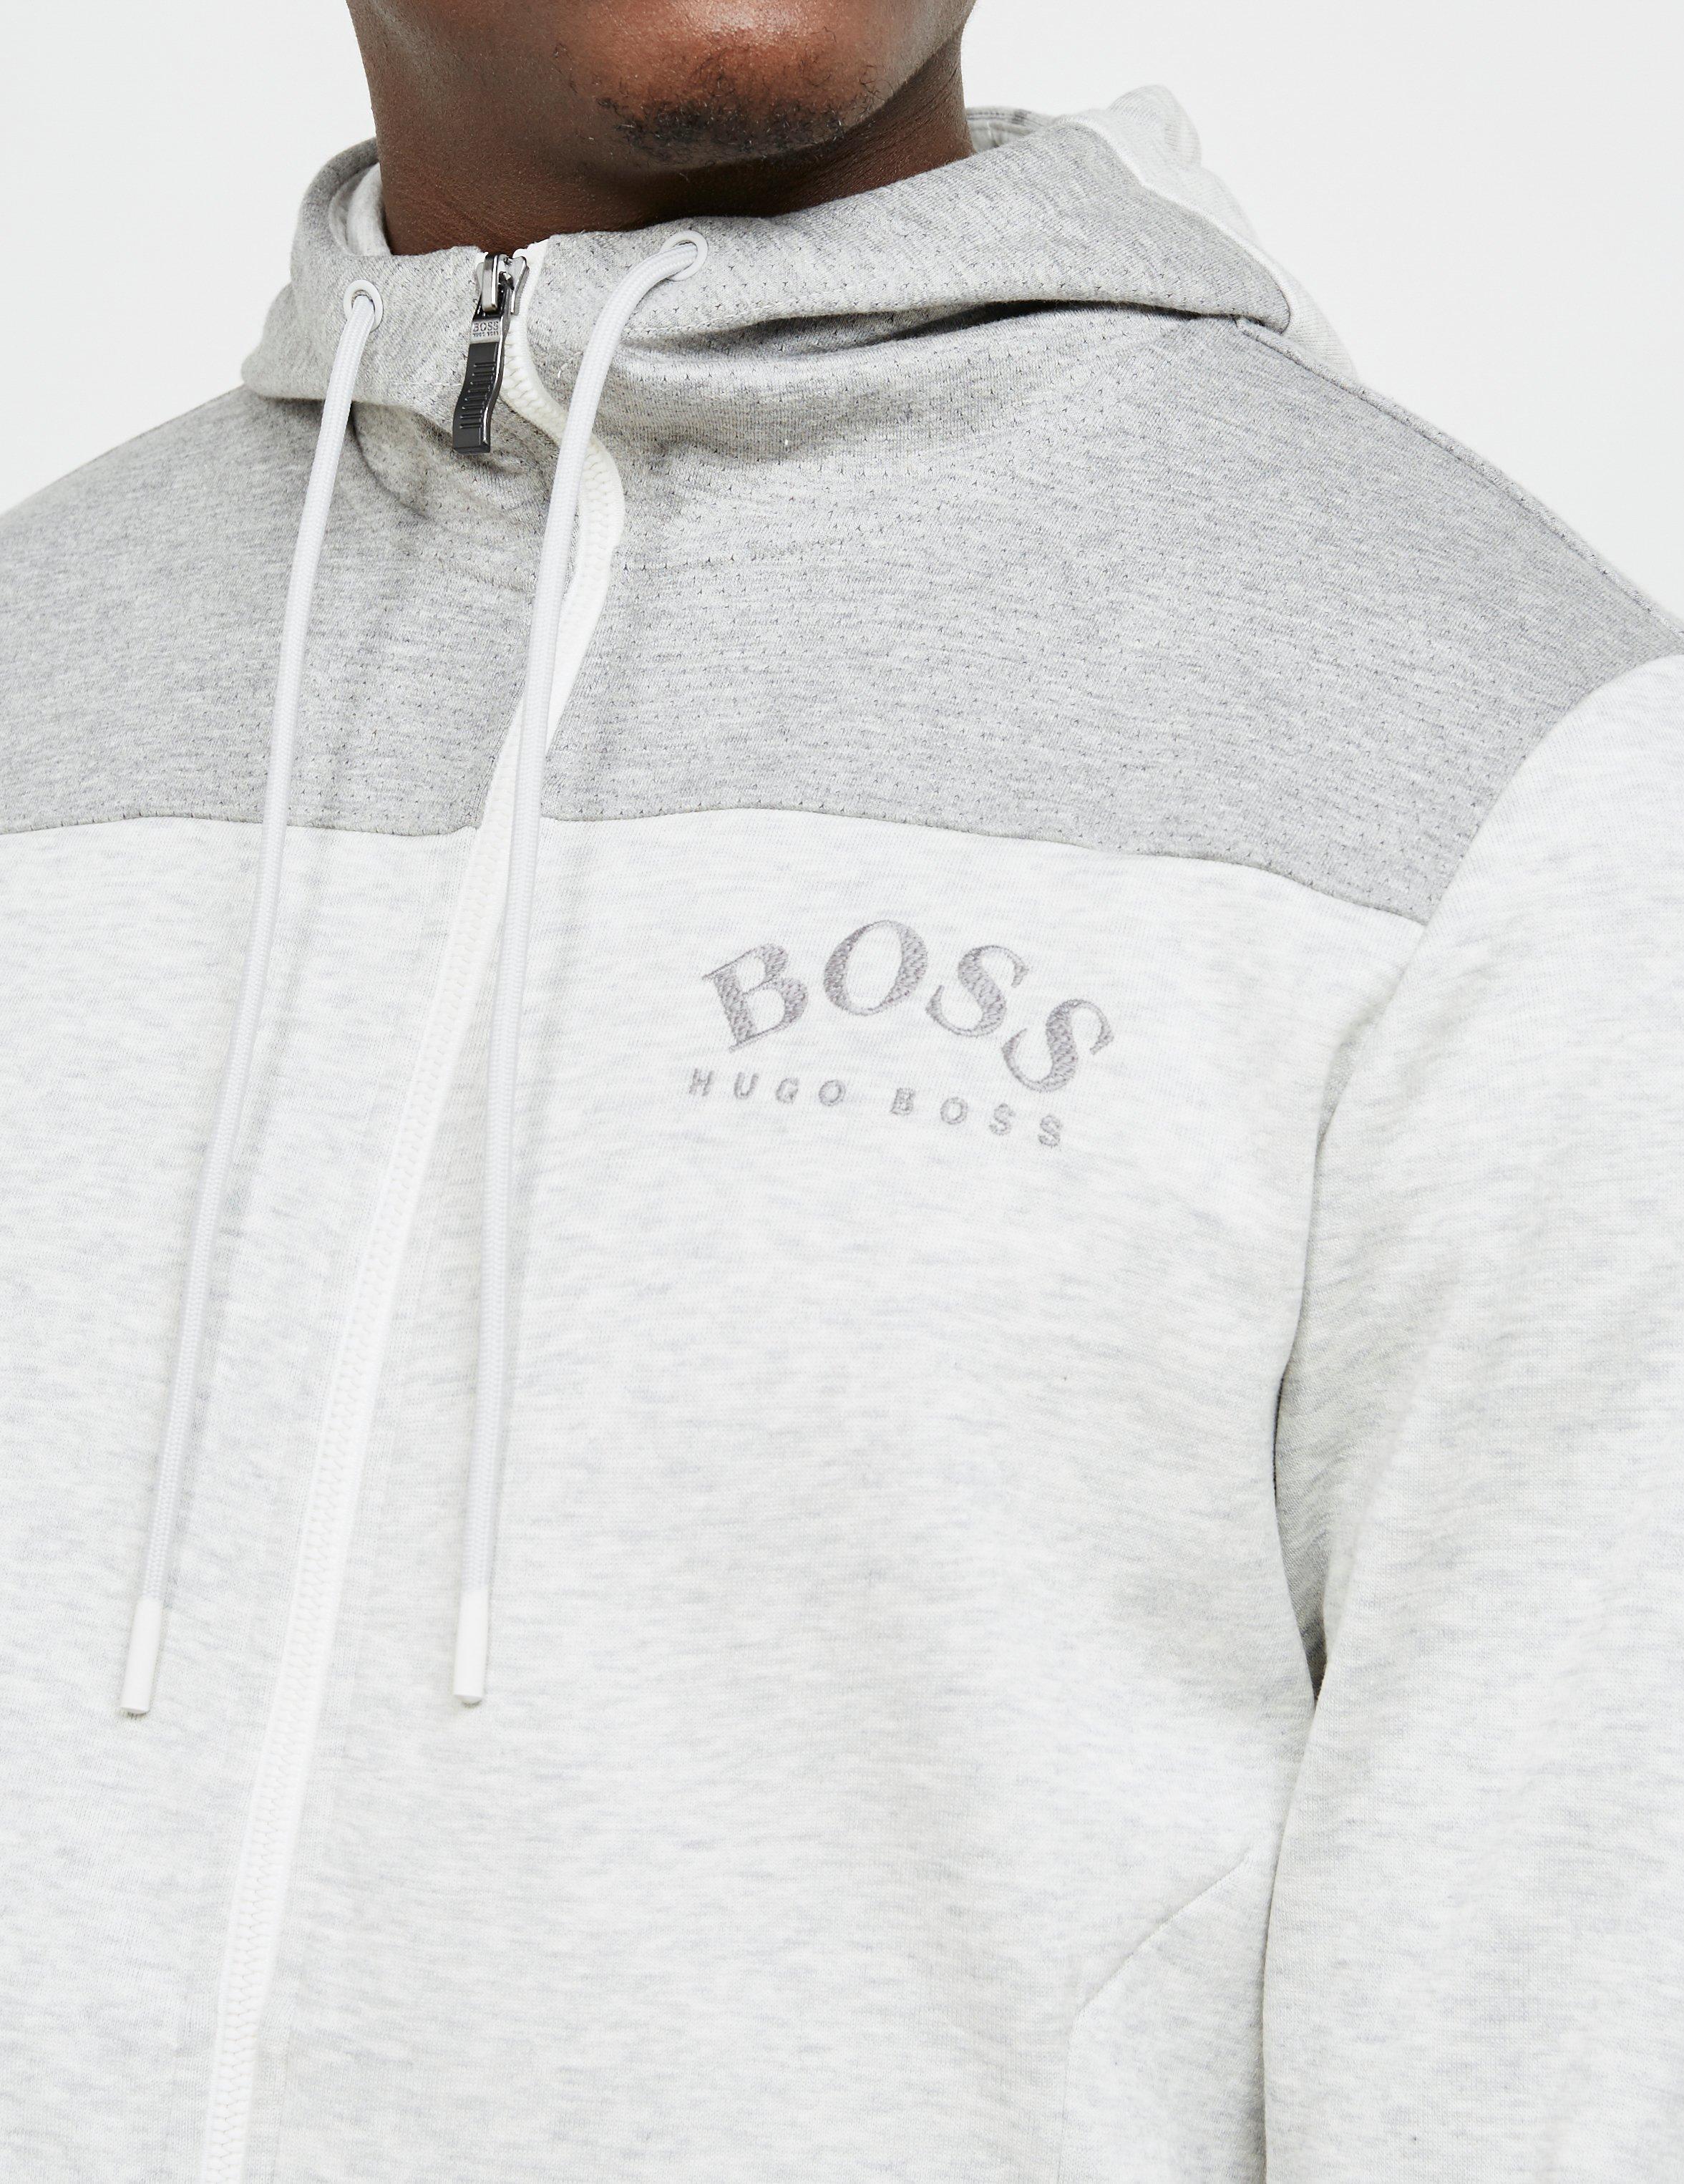 BOSS by HUGO BOSS Cotton Saggy Full Zip Hoodie Grey in Gray for Men - Lyst